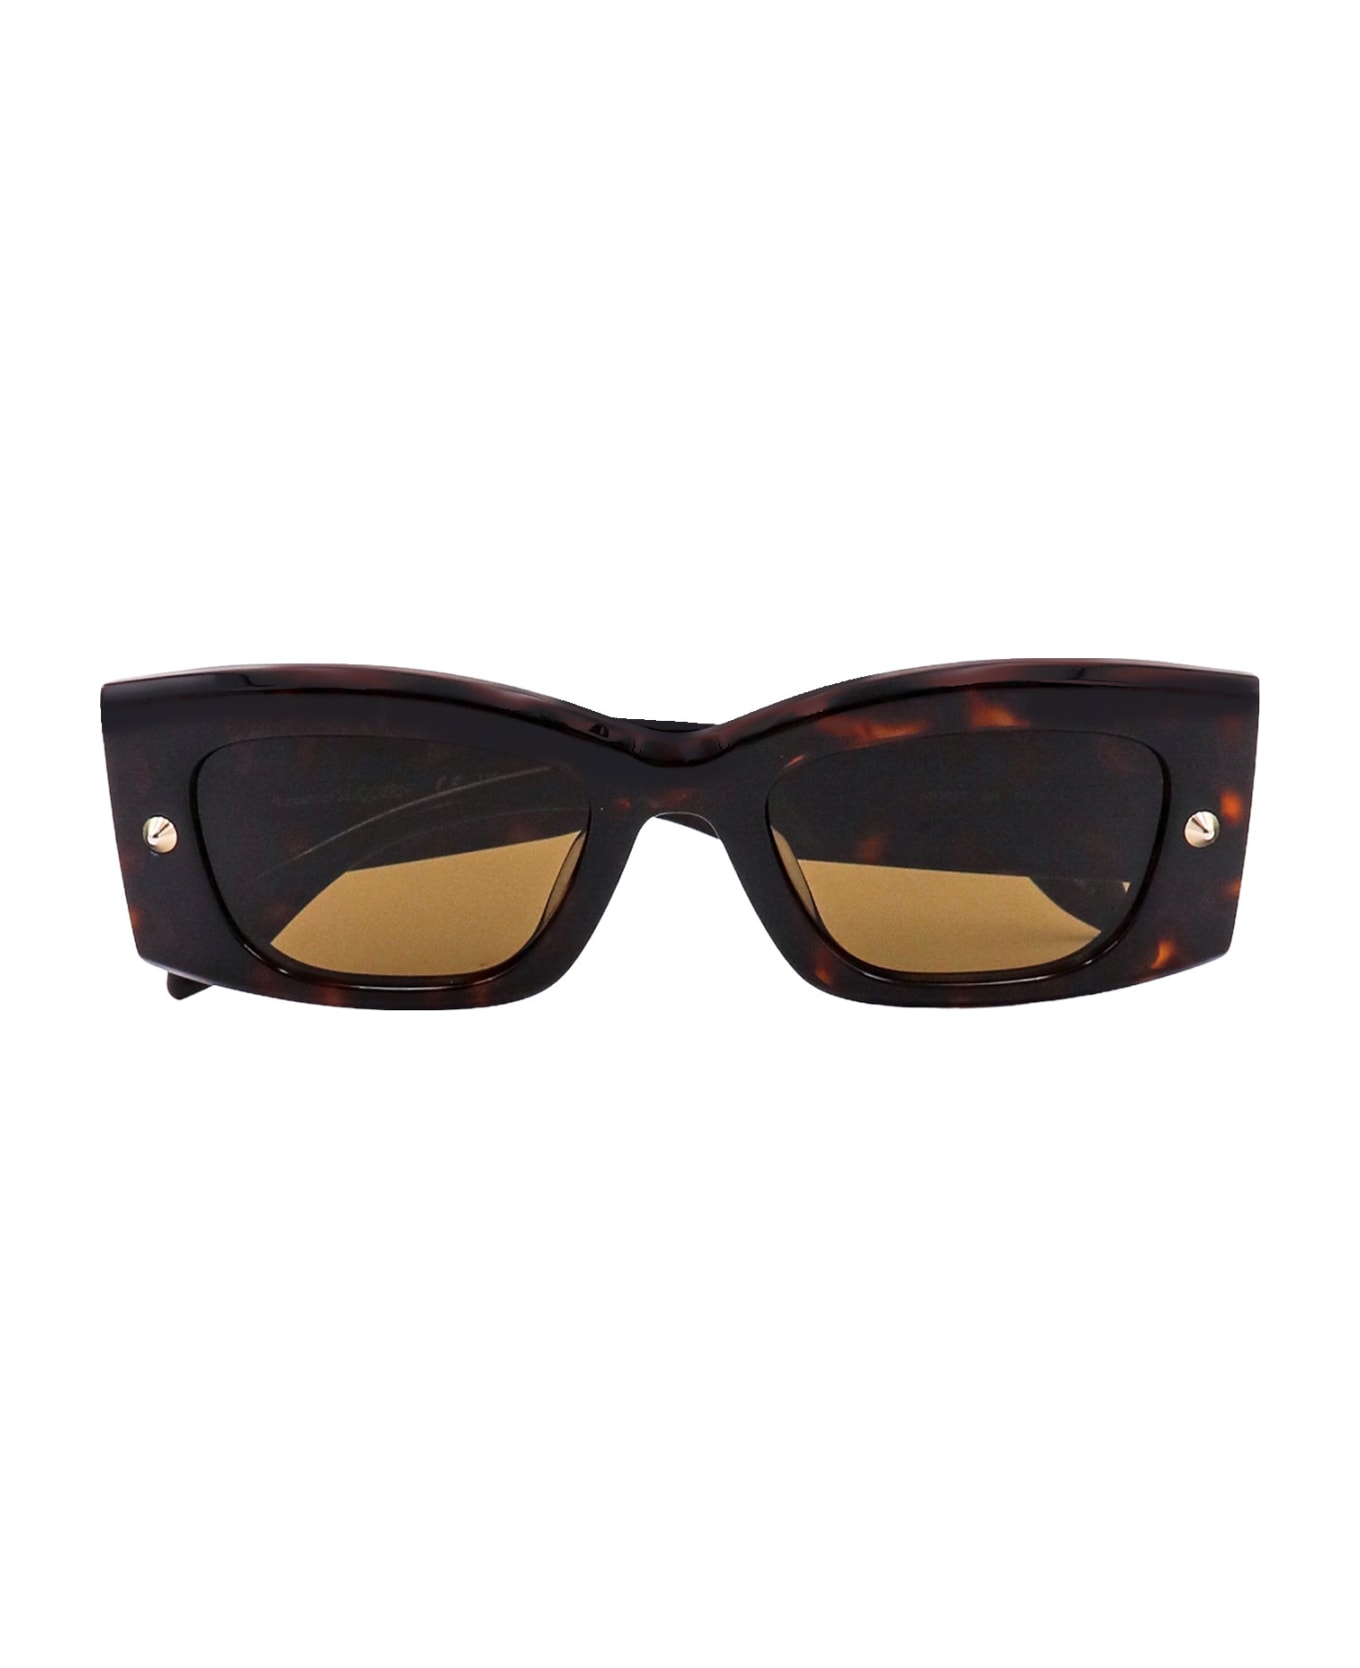 Alexander McQueen Eyewear Sunglasses - Brown